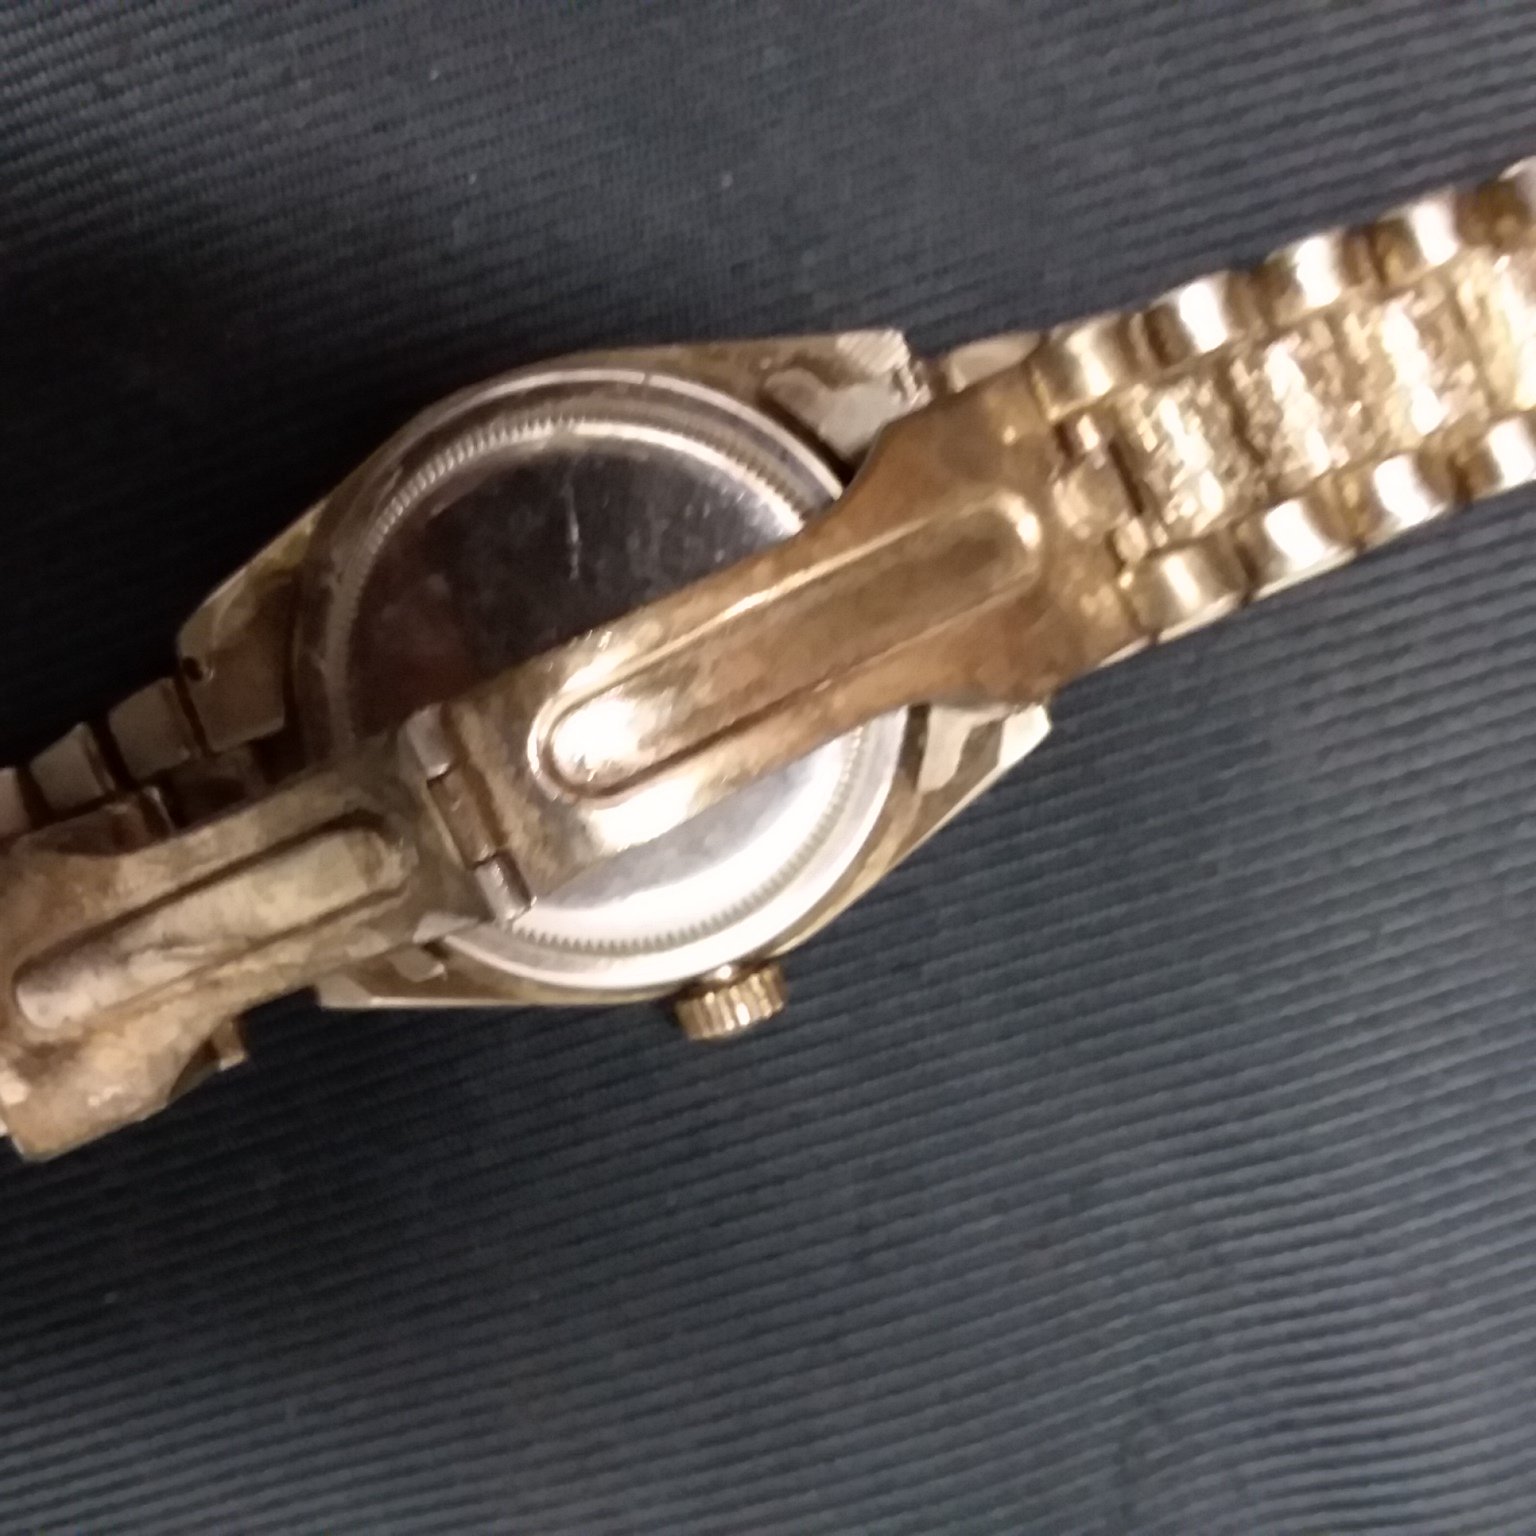 Geneva Superlative Chronometer Officially Certified Wristwatch Help ID ...